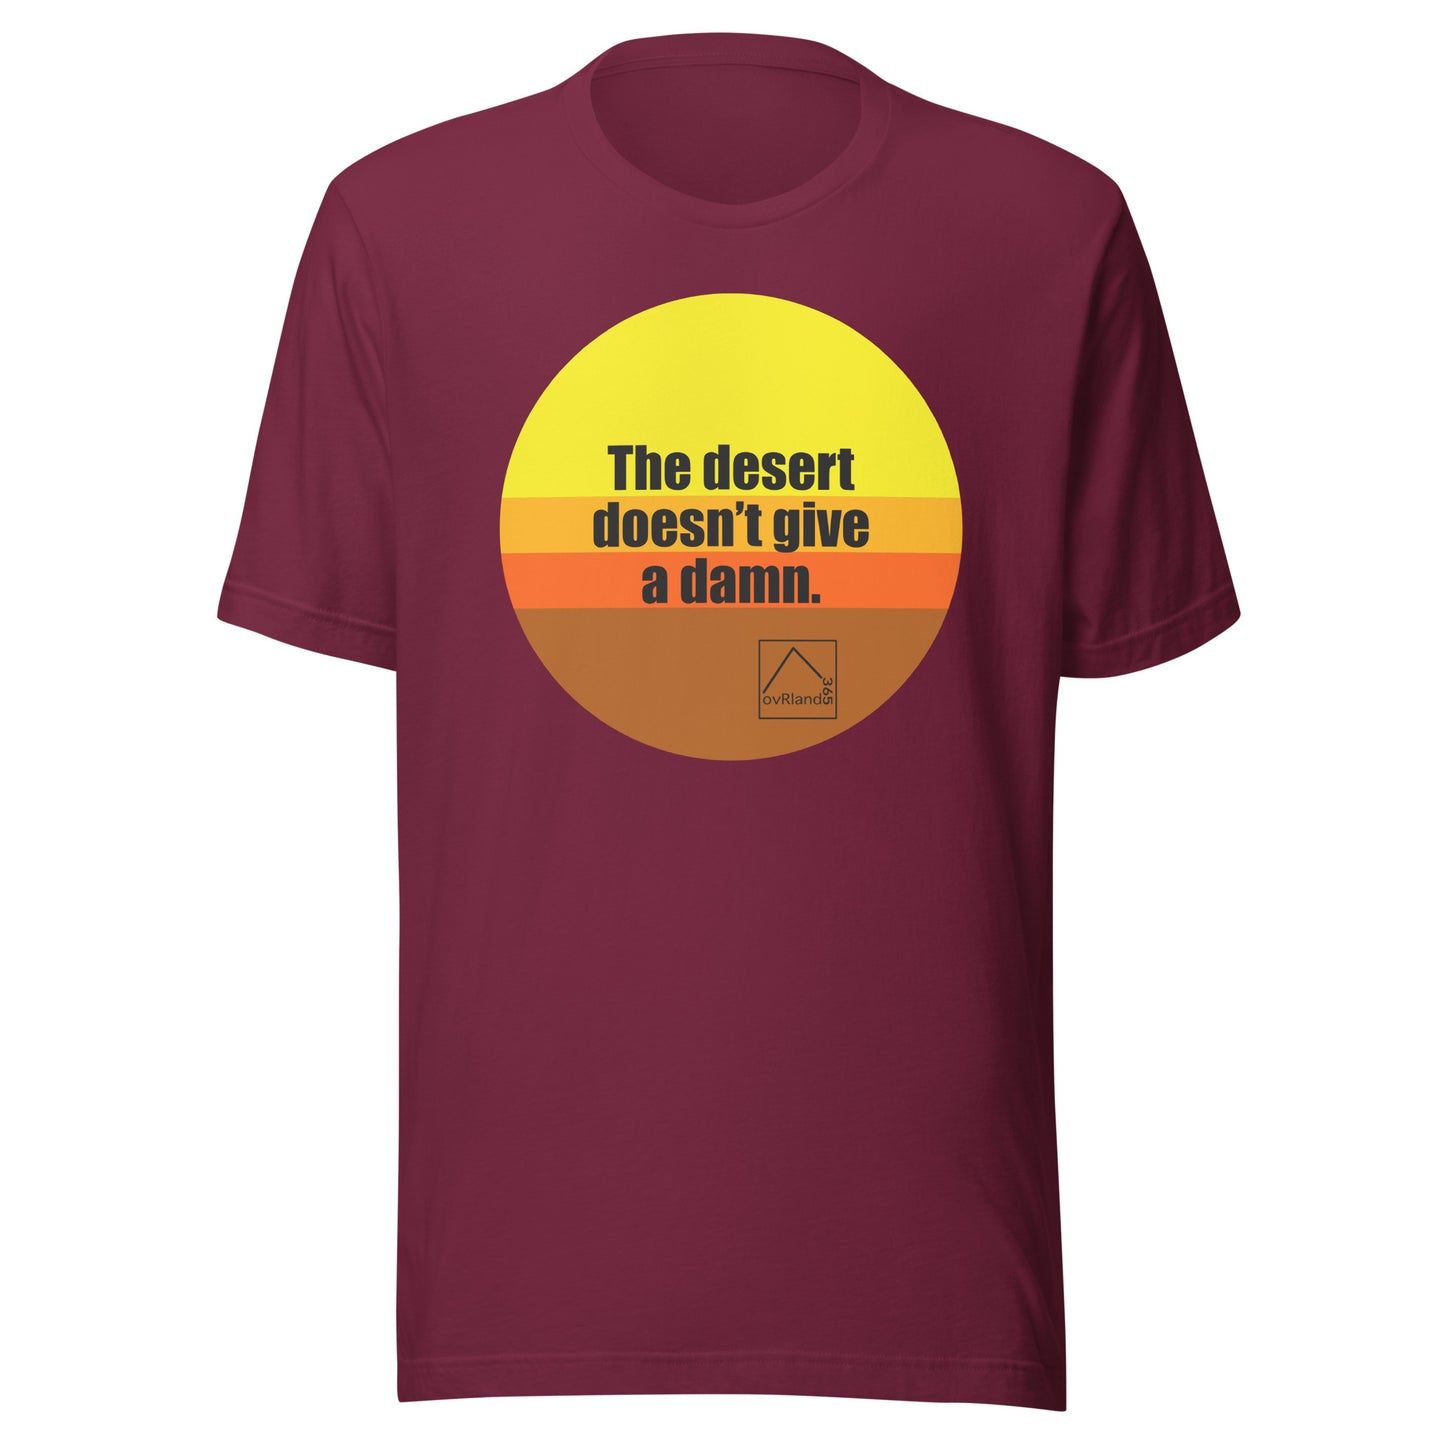 The desert doesn't give a damn. Maroon t-shirt. overland365.com